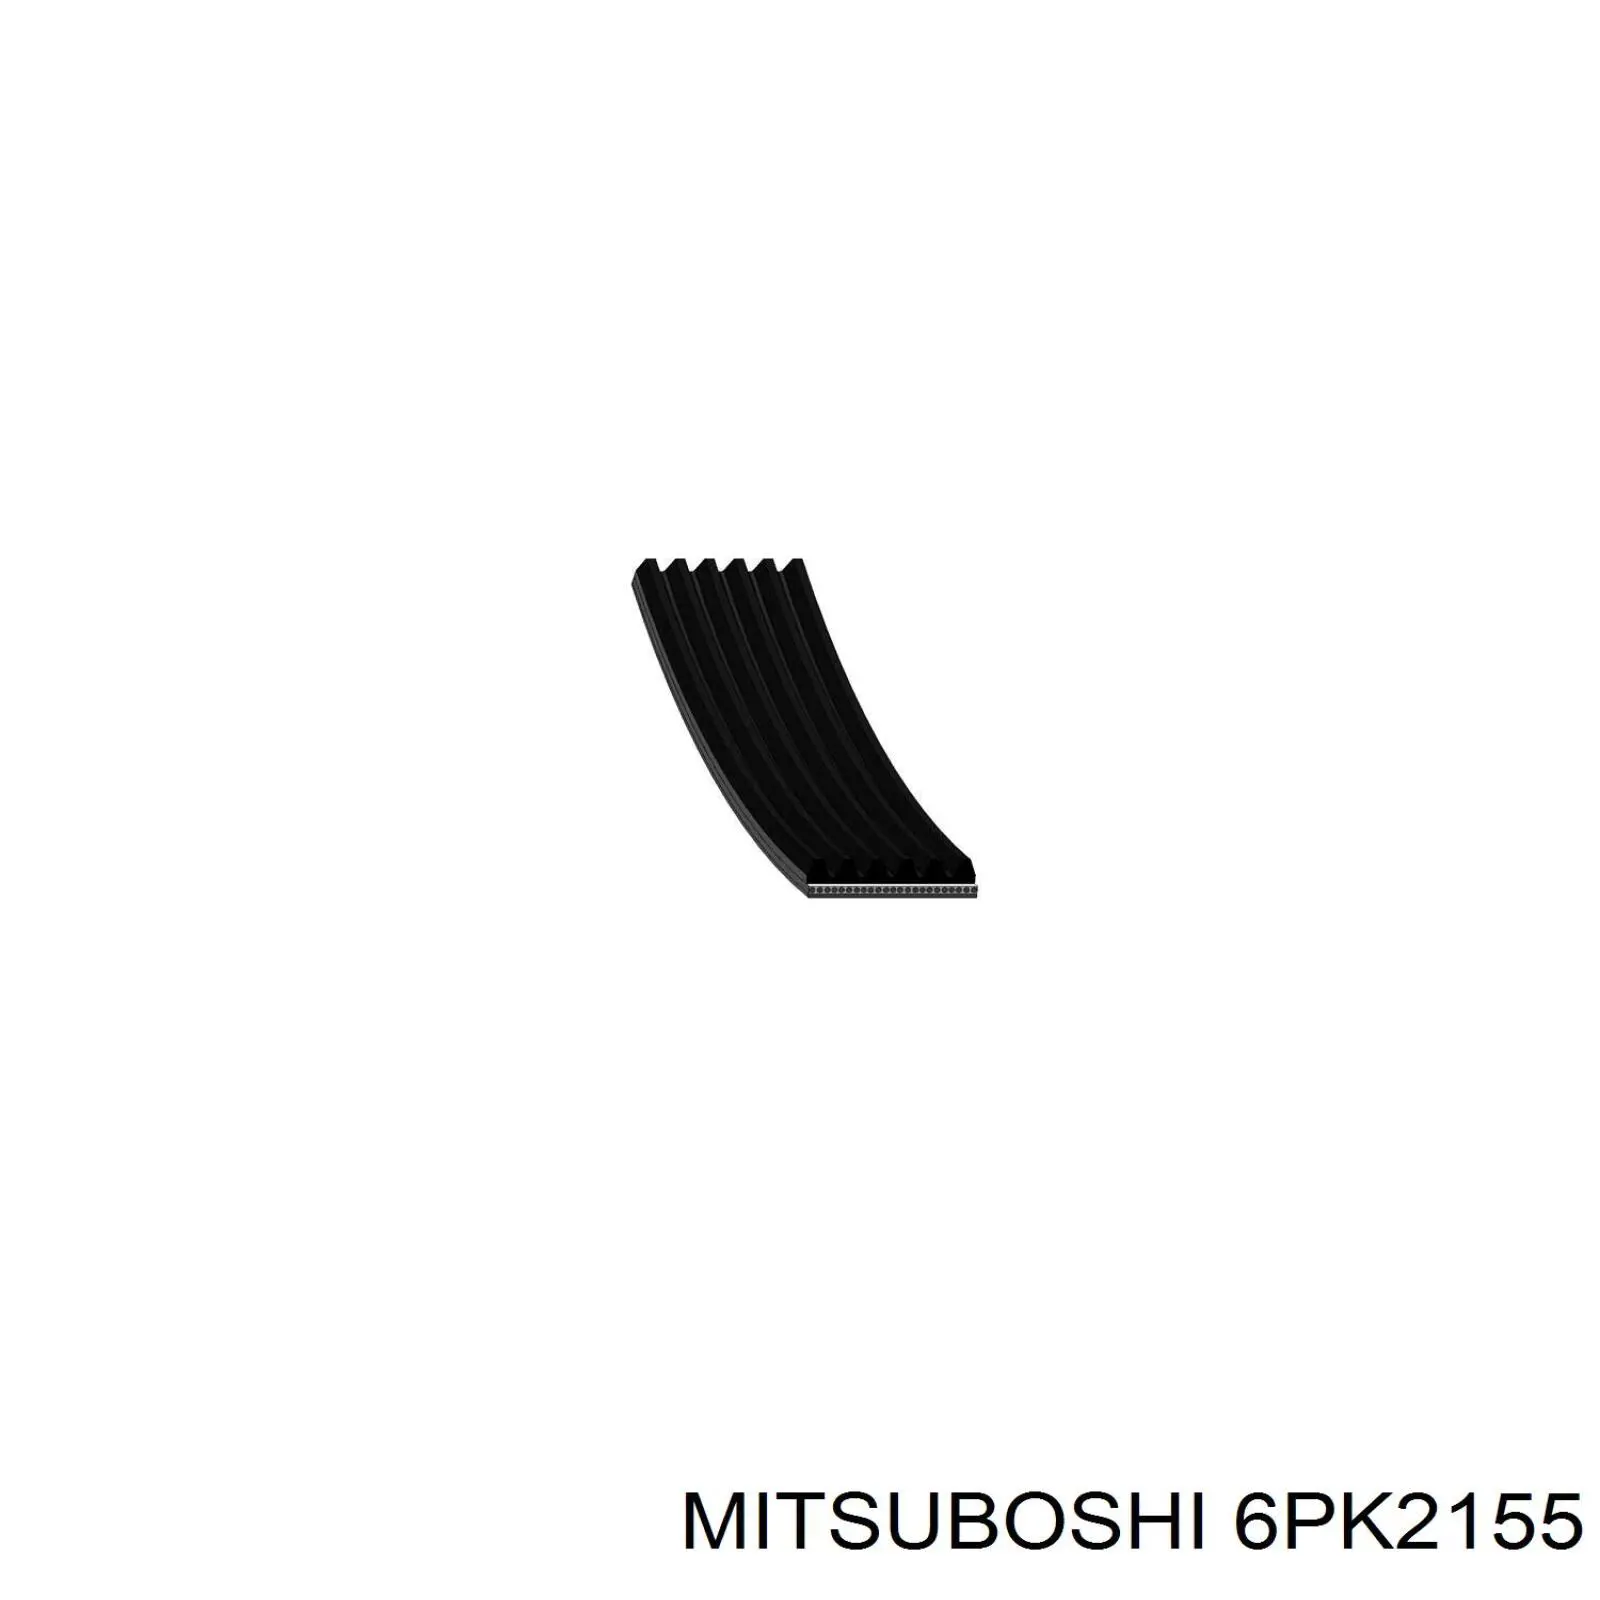 6PK2155 Mitsuboshi correa trapezoidal